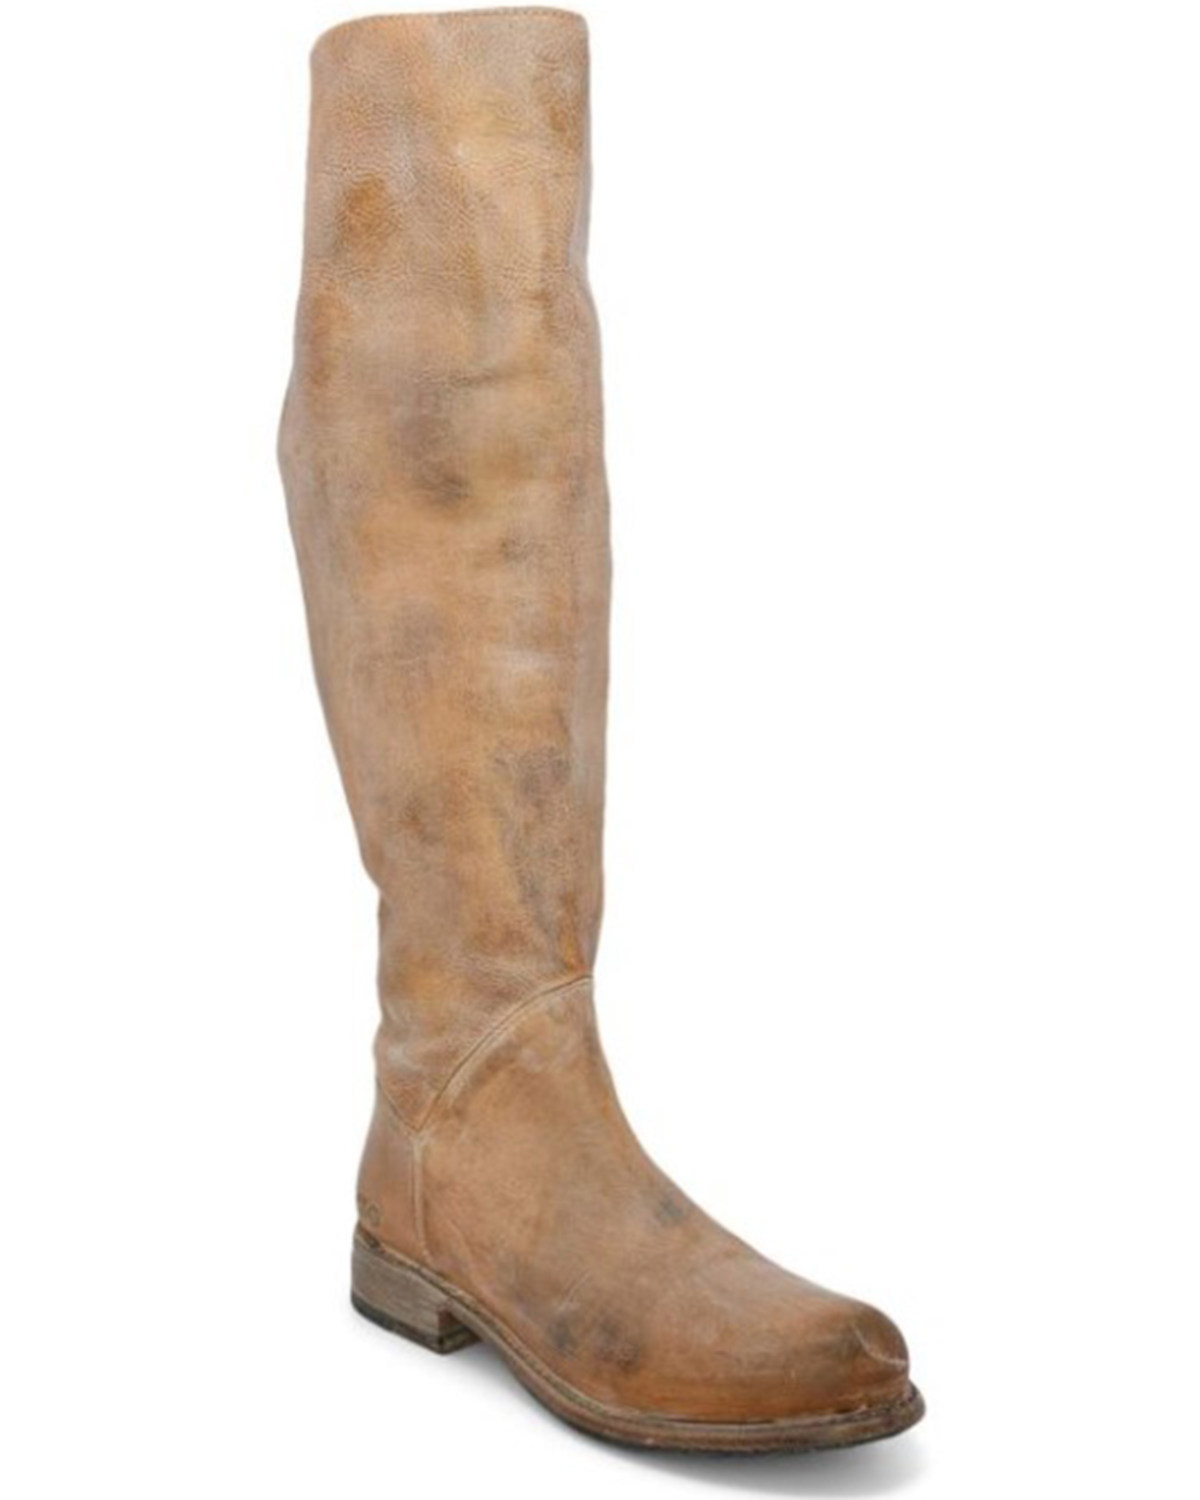 Bed Stu Women's Manchester Wide Calf Tall Boots - Round Toe